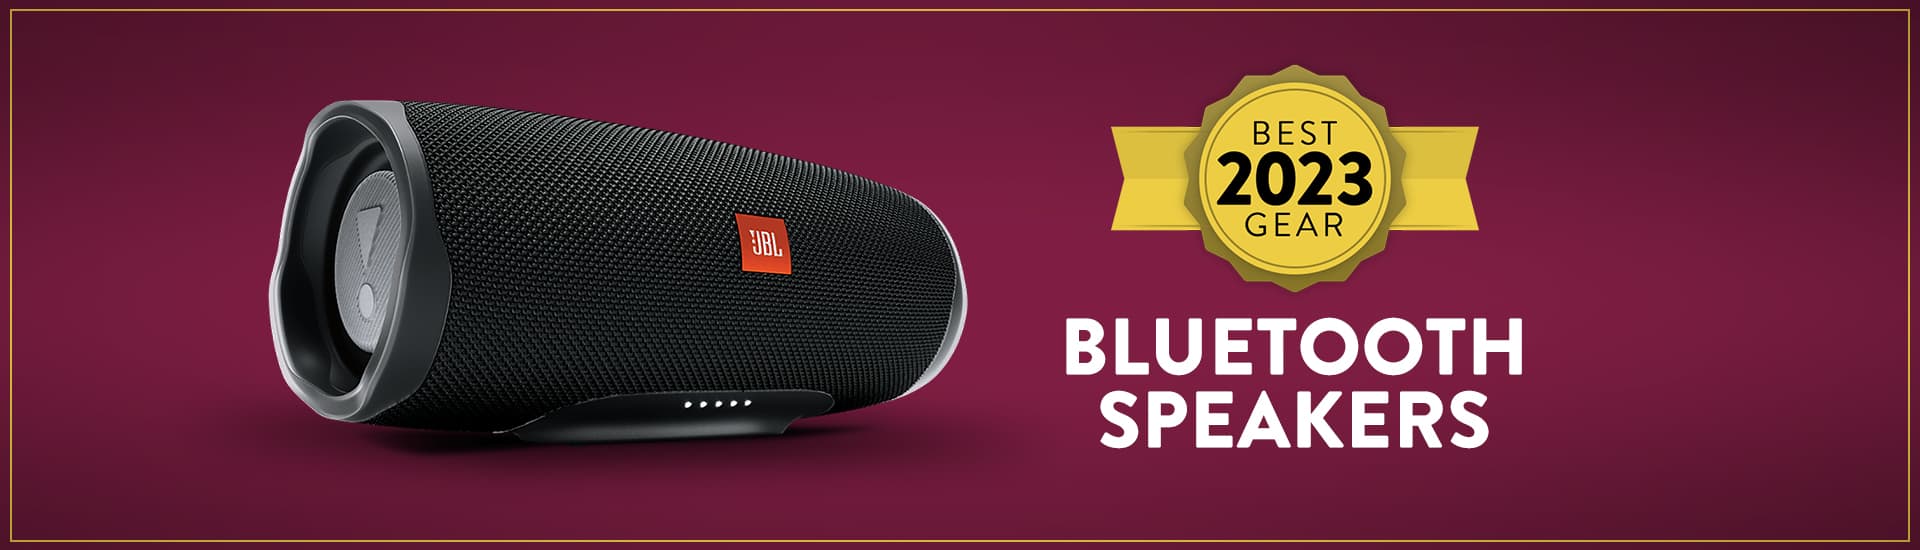 29 best portable bluetooth speakers of 2023